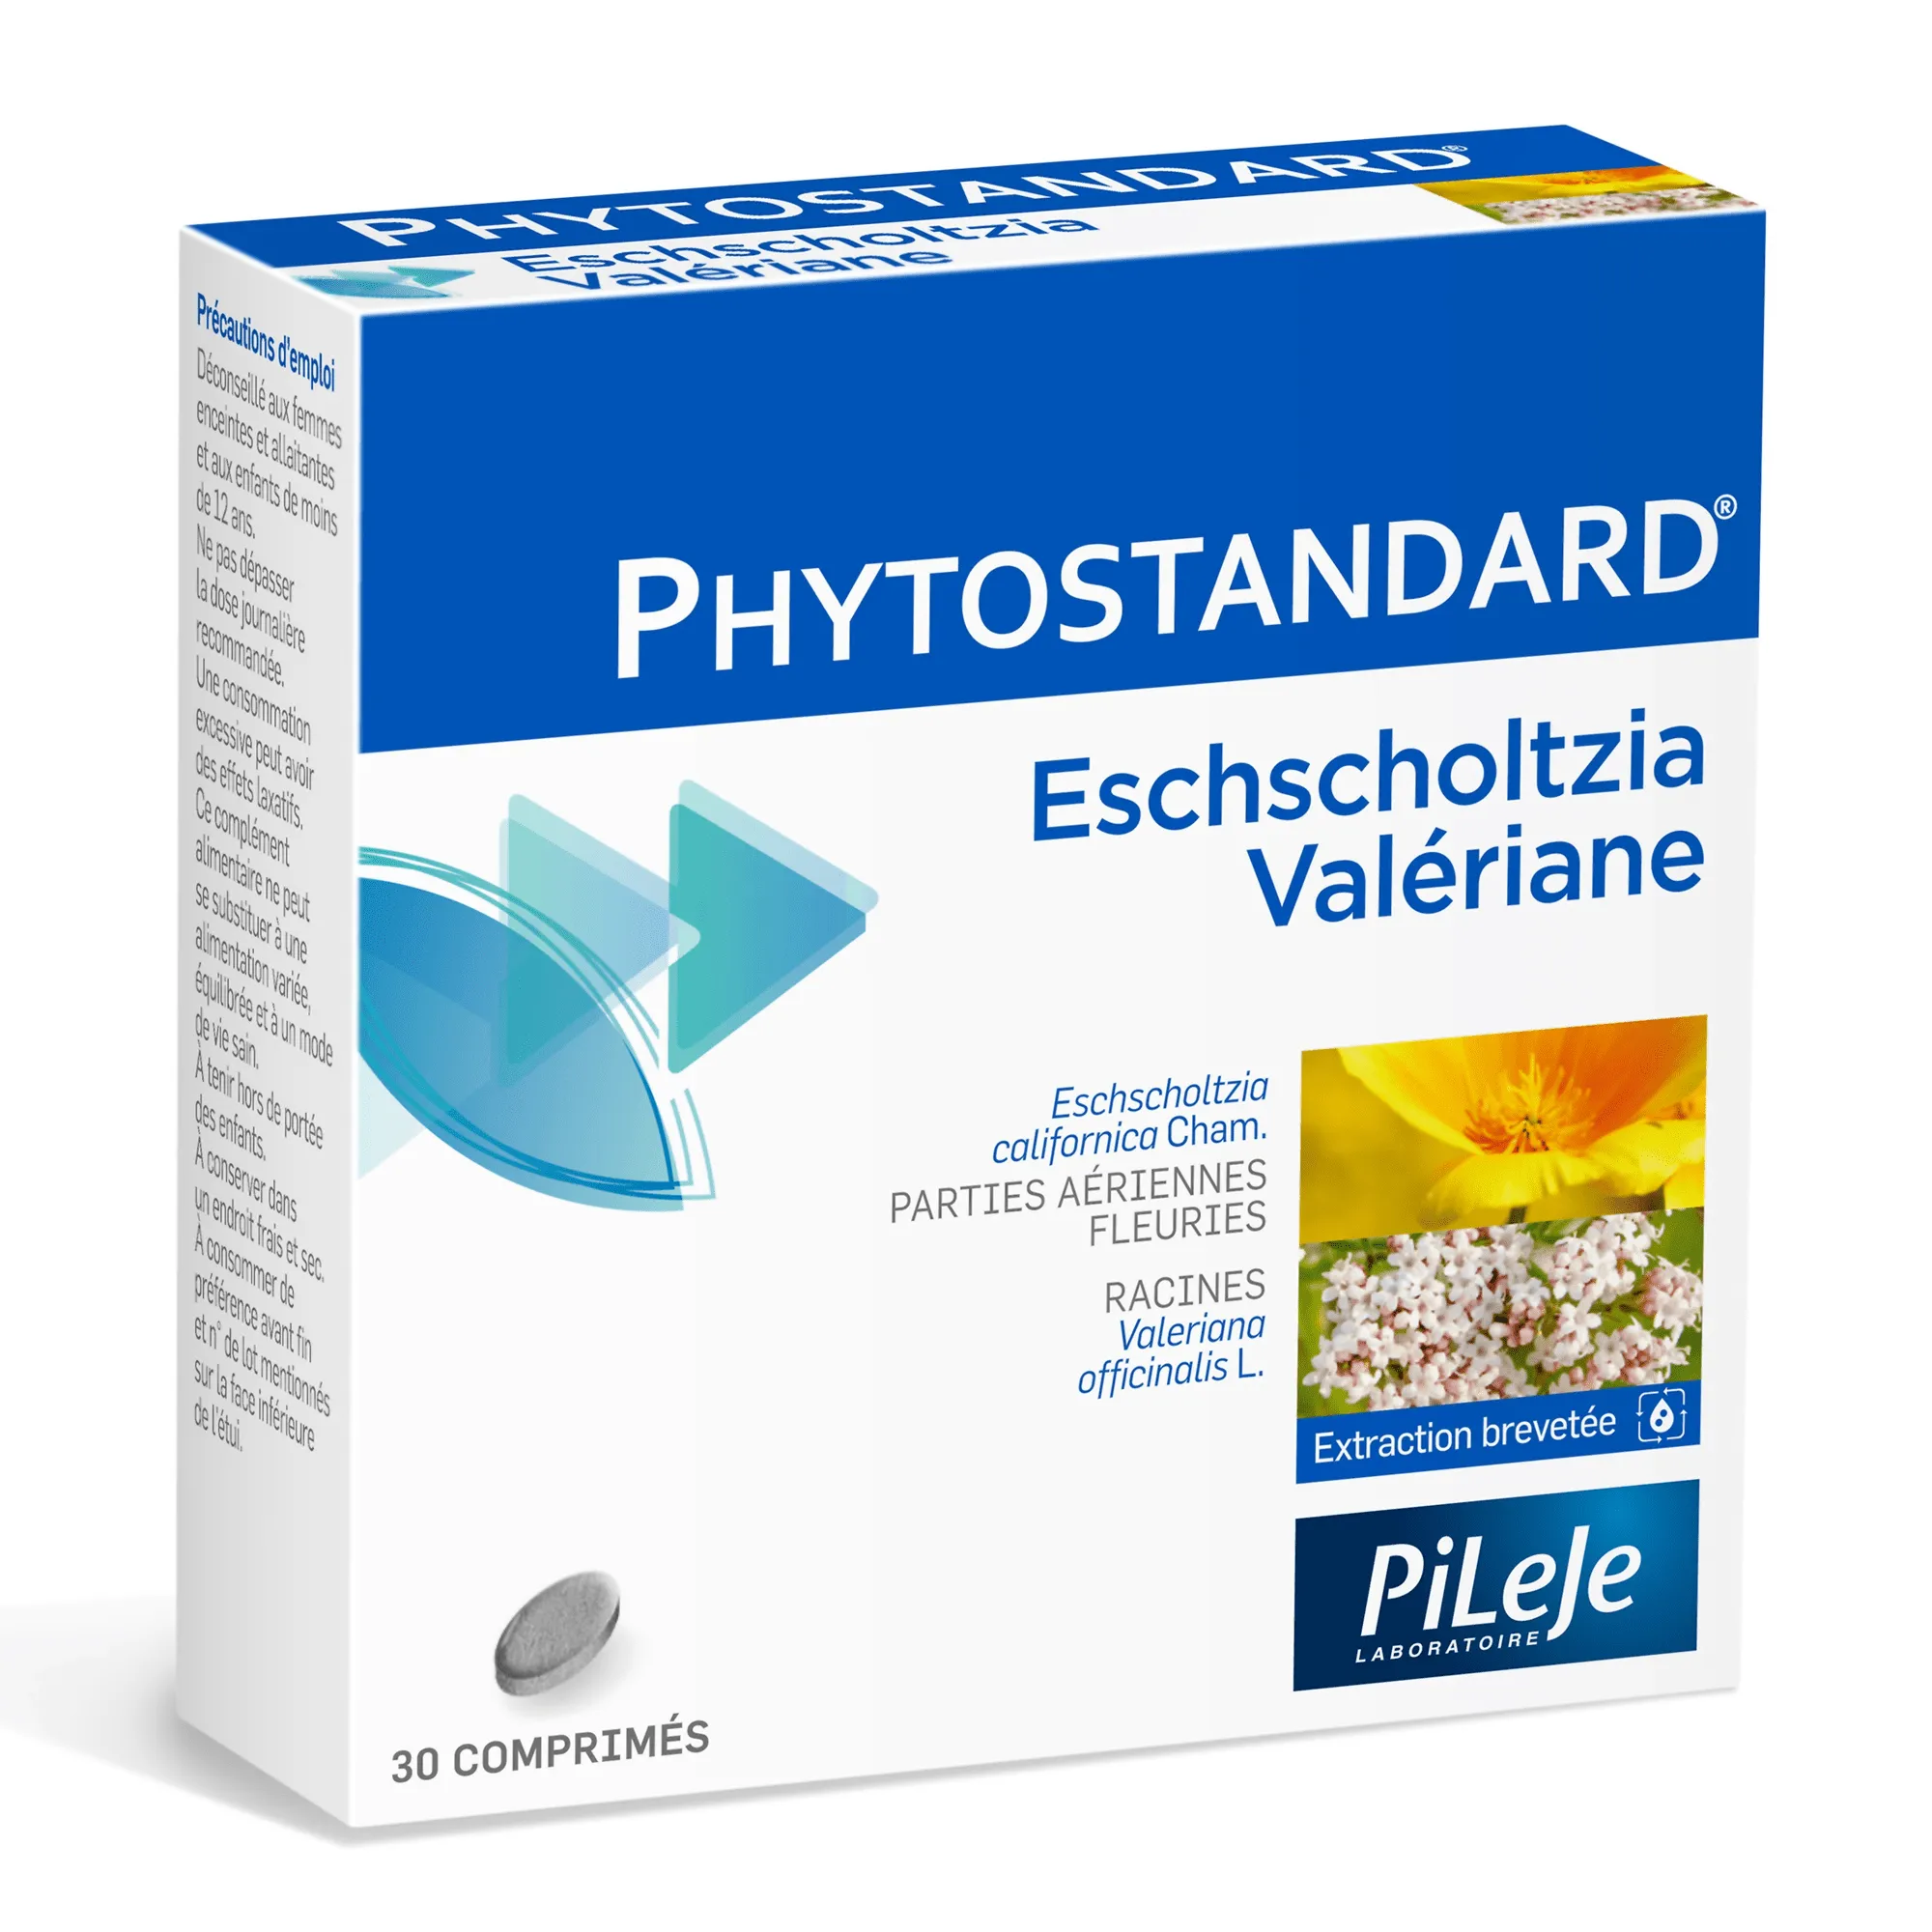 pileje-phytostandard-duo-eschscholtzia-valeriane